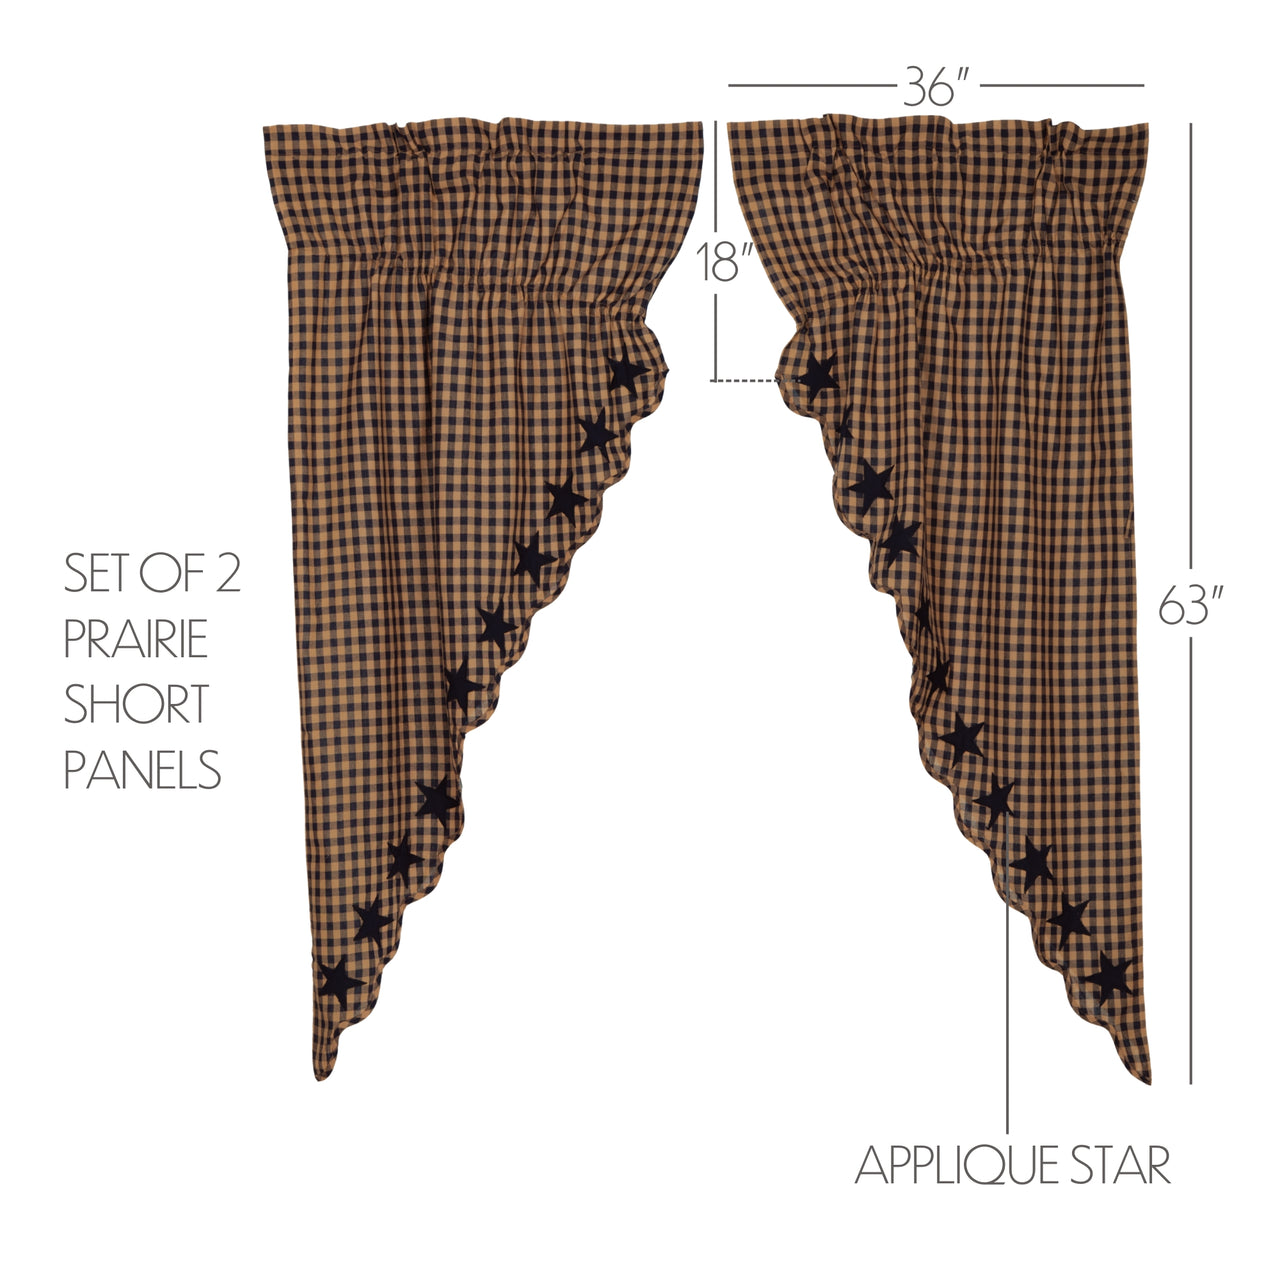 Navy Star Scalloped Prairie Short Panel Curtain Set of 2 63x36x18